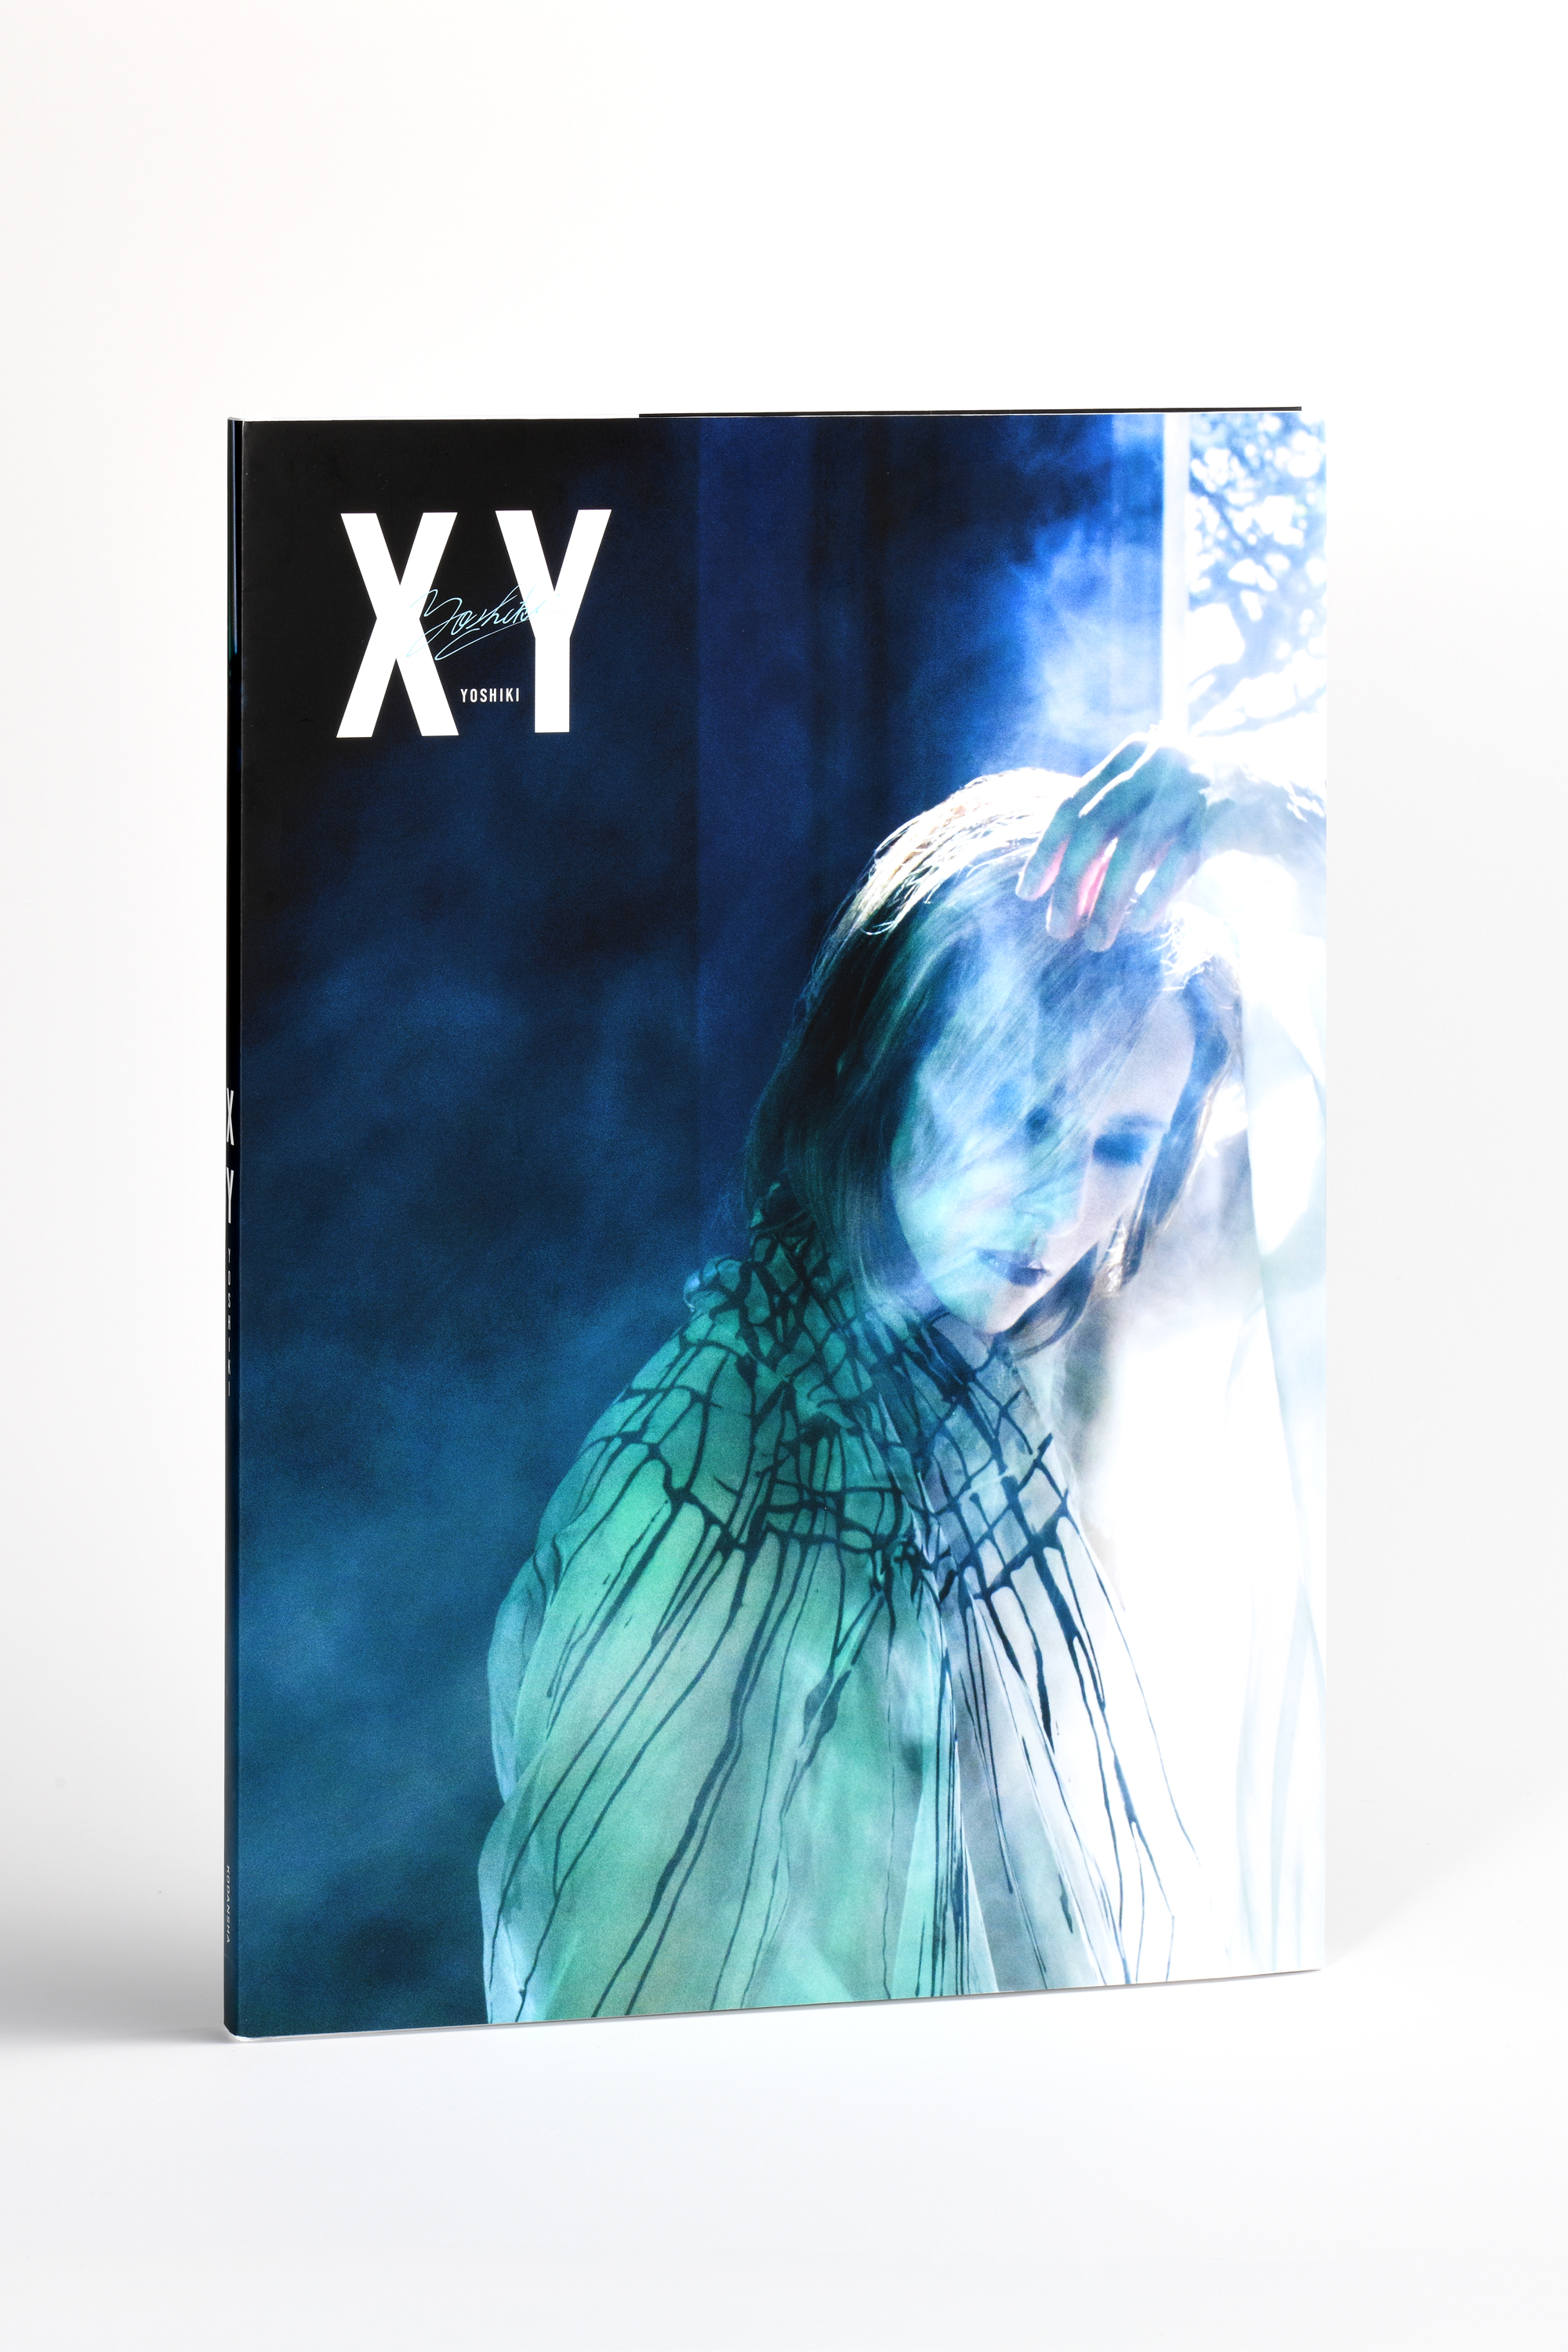 YOSHIKI(X JAPAN)｜28年ぶりとなる全編撮りおろしの写真集『XY』が11月 